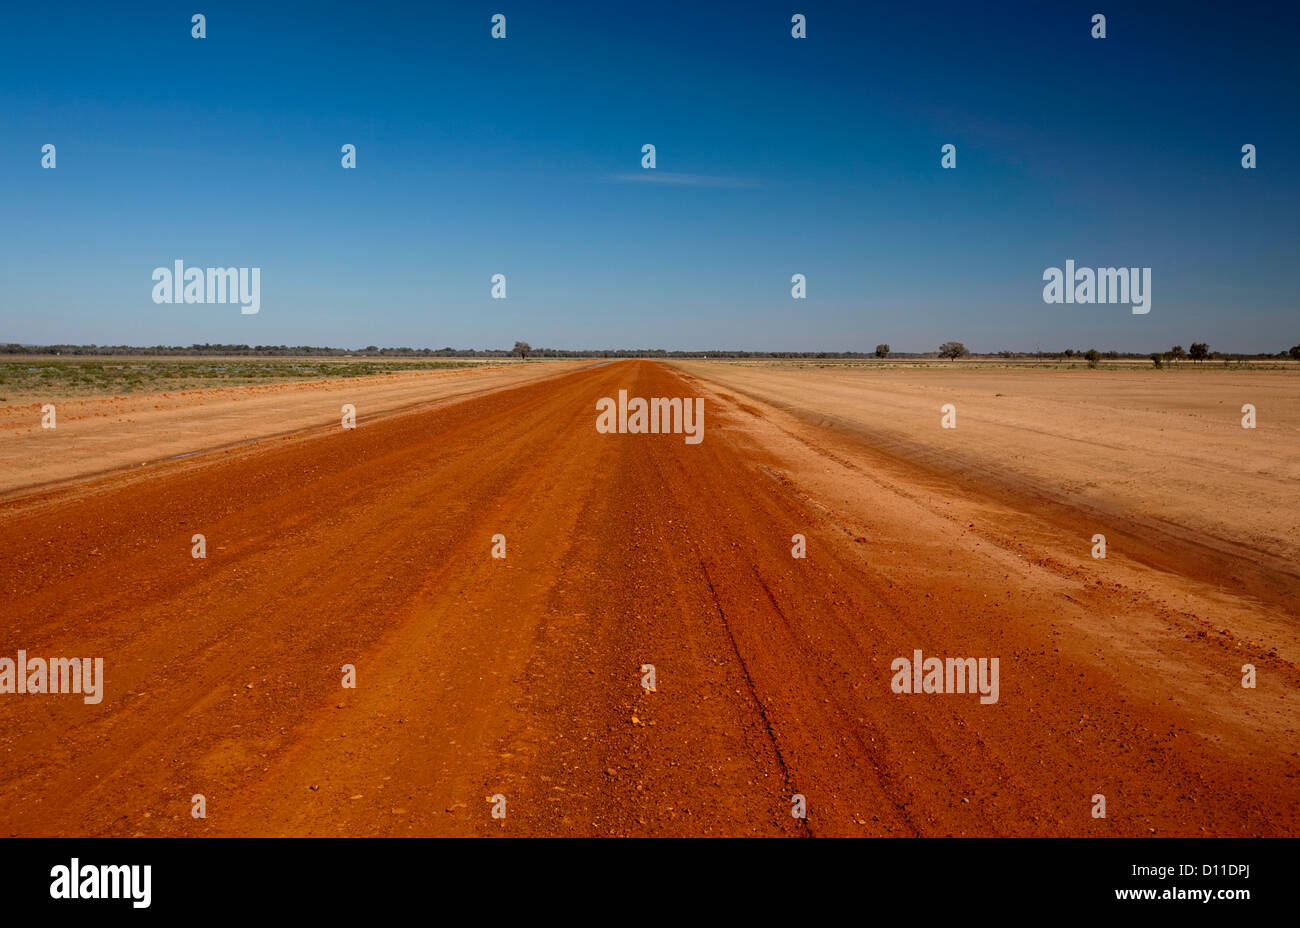 Long red Australian outback road across barren desert landscape and treeless plains of north-western NSW Australia to the far horizon Stock Photo